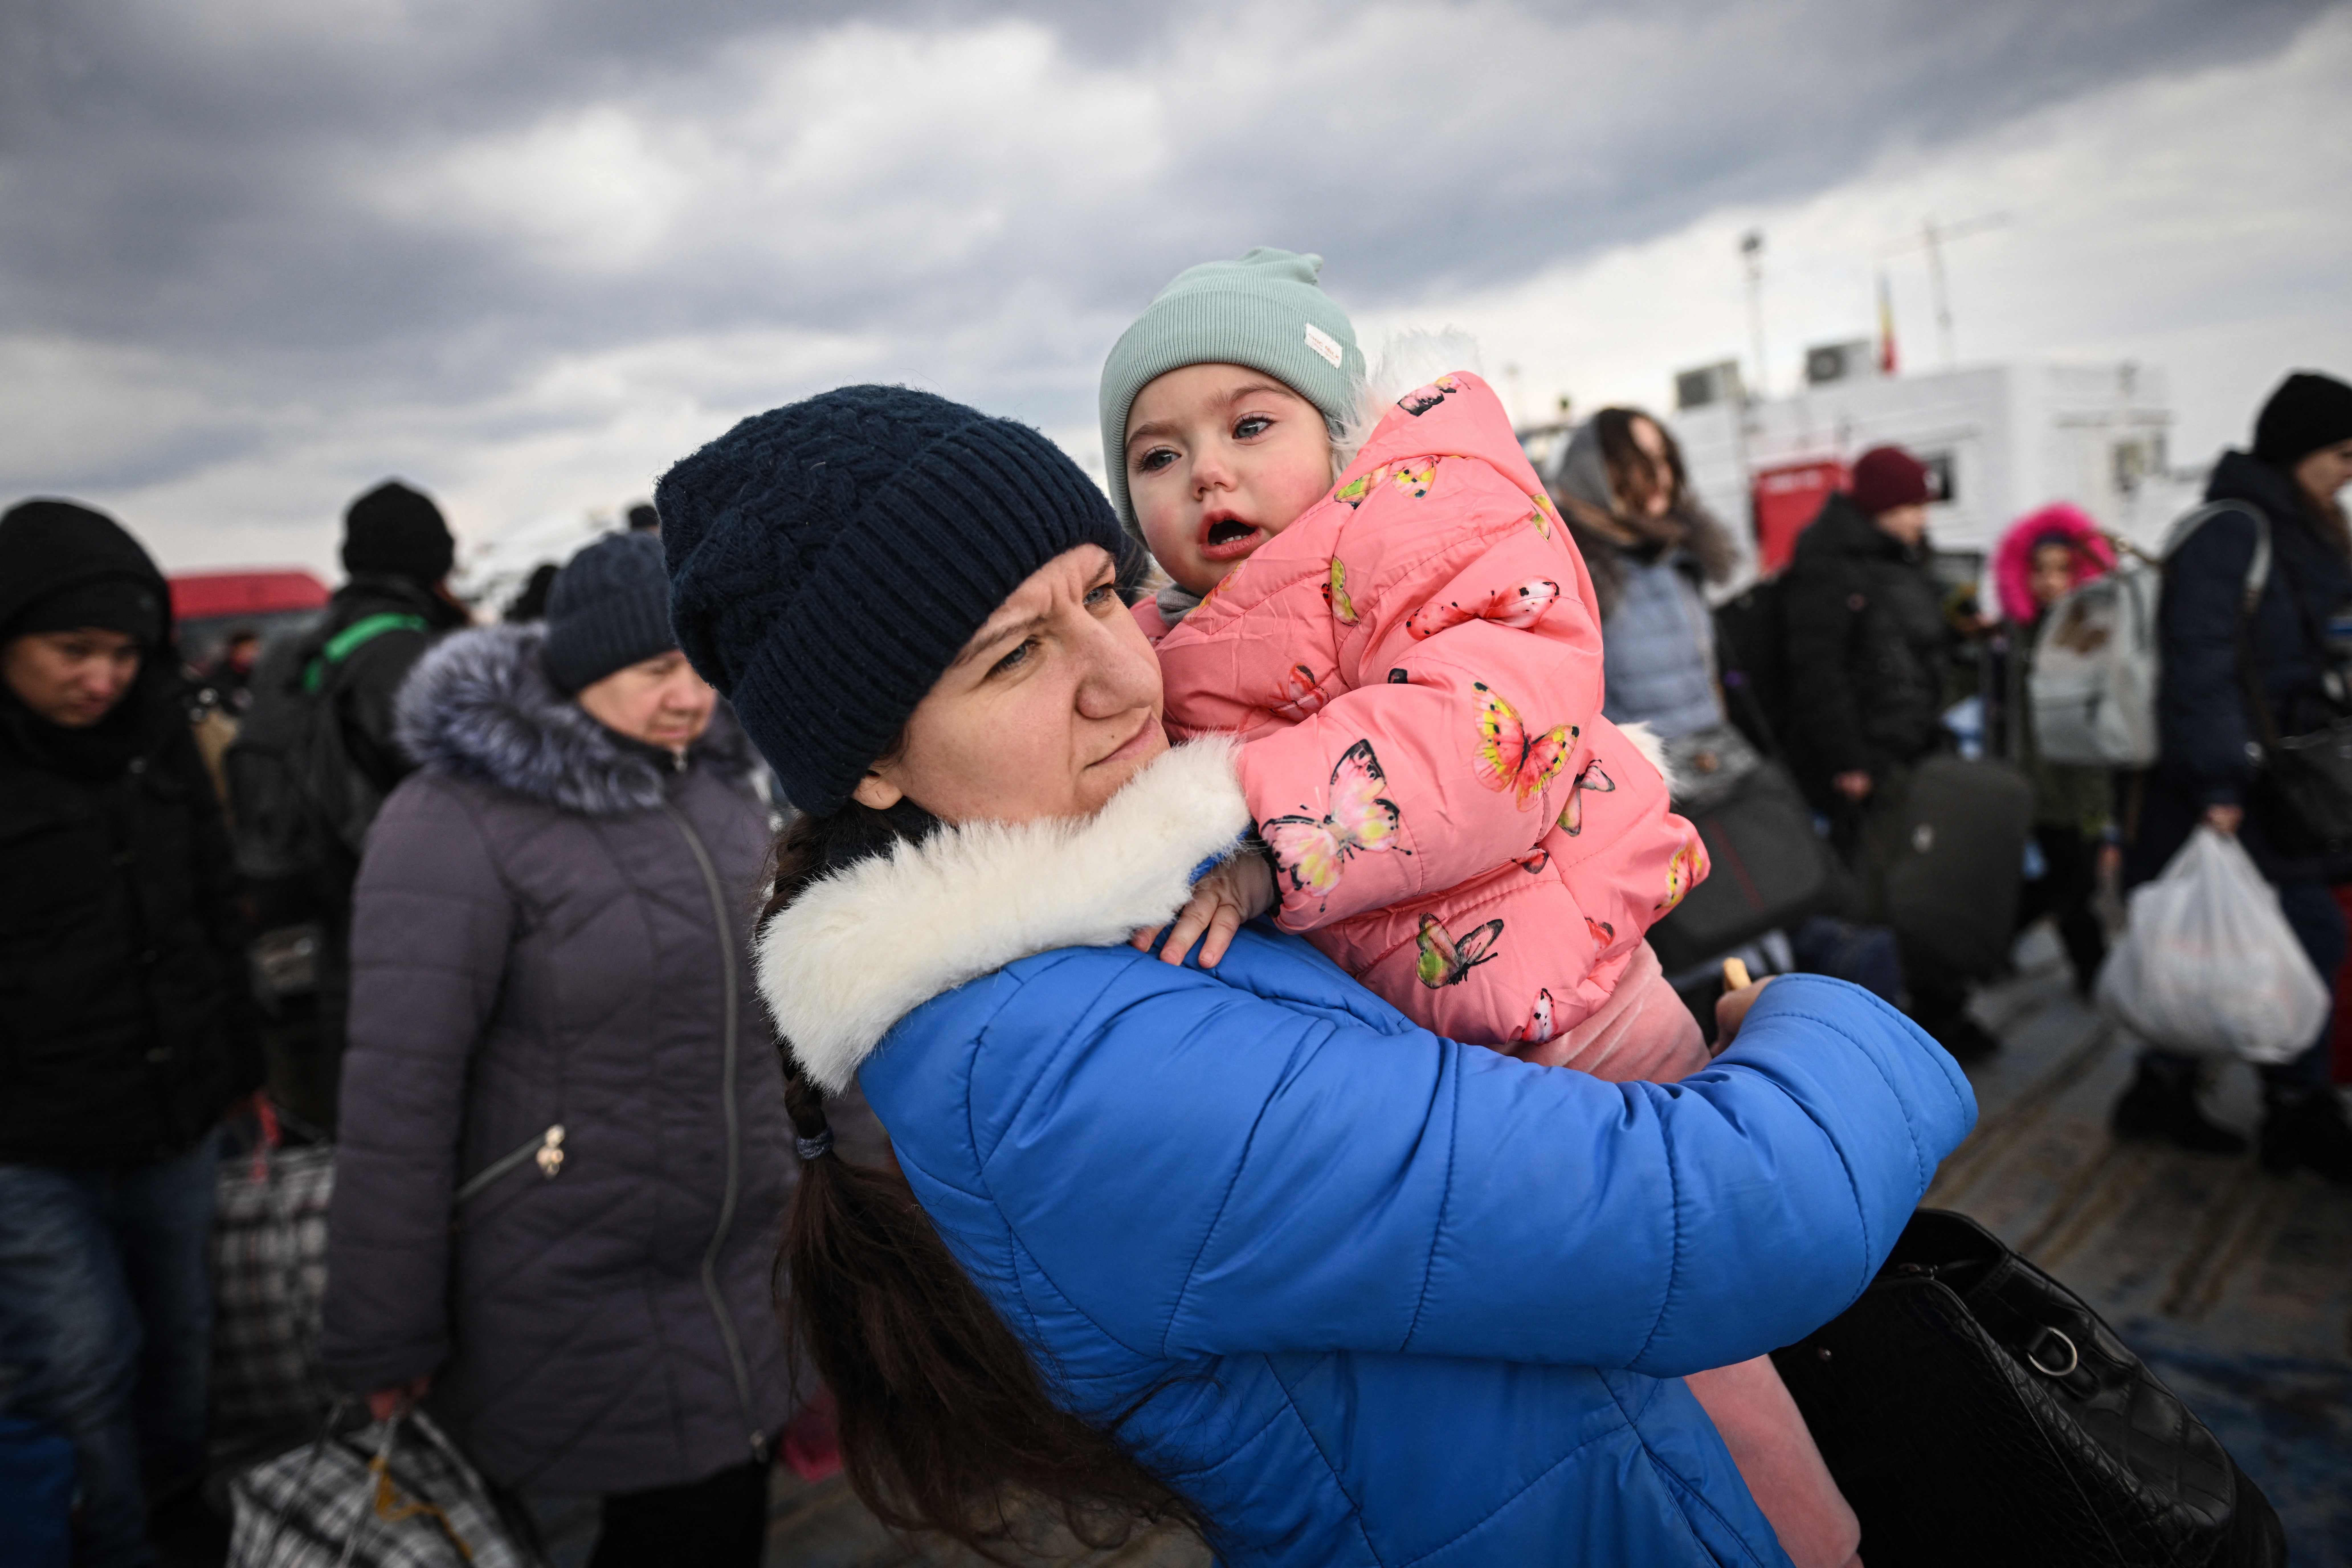 Ukrainian refugees arrive via ferry in Romania on Tuesday